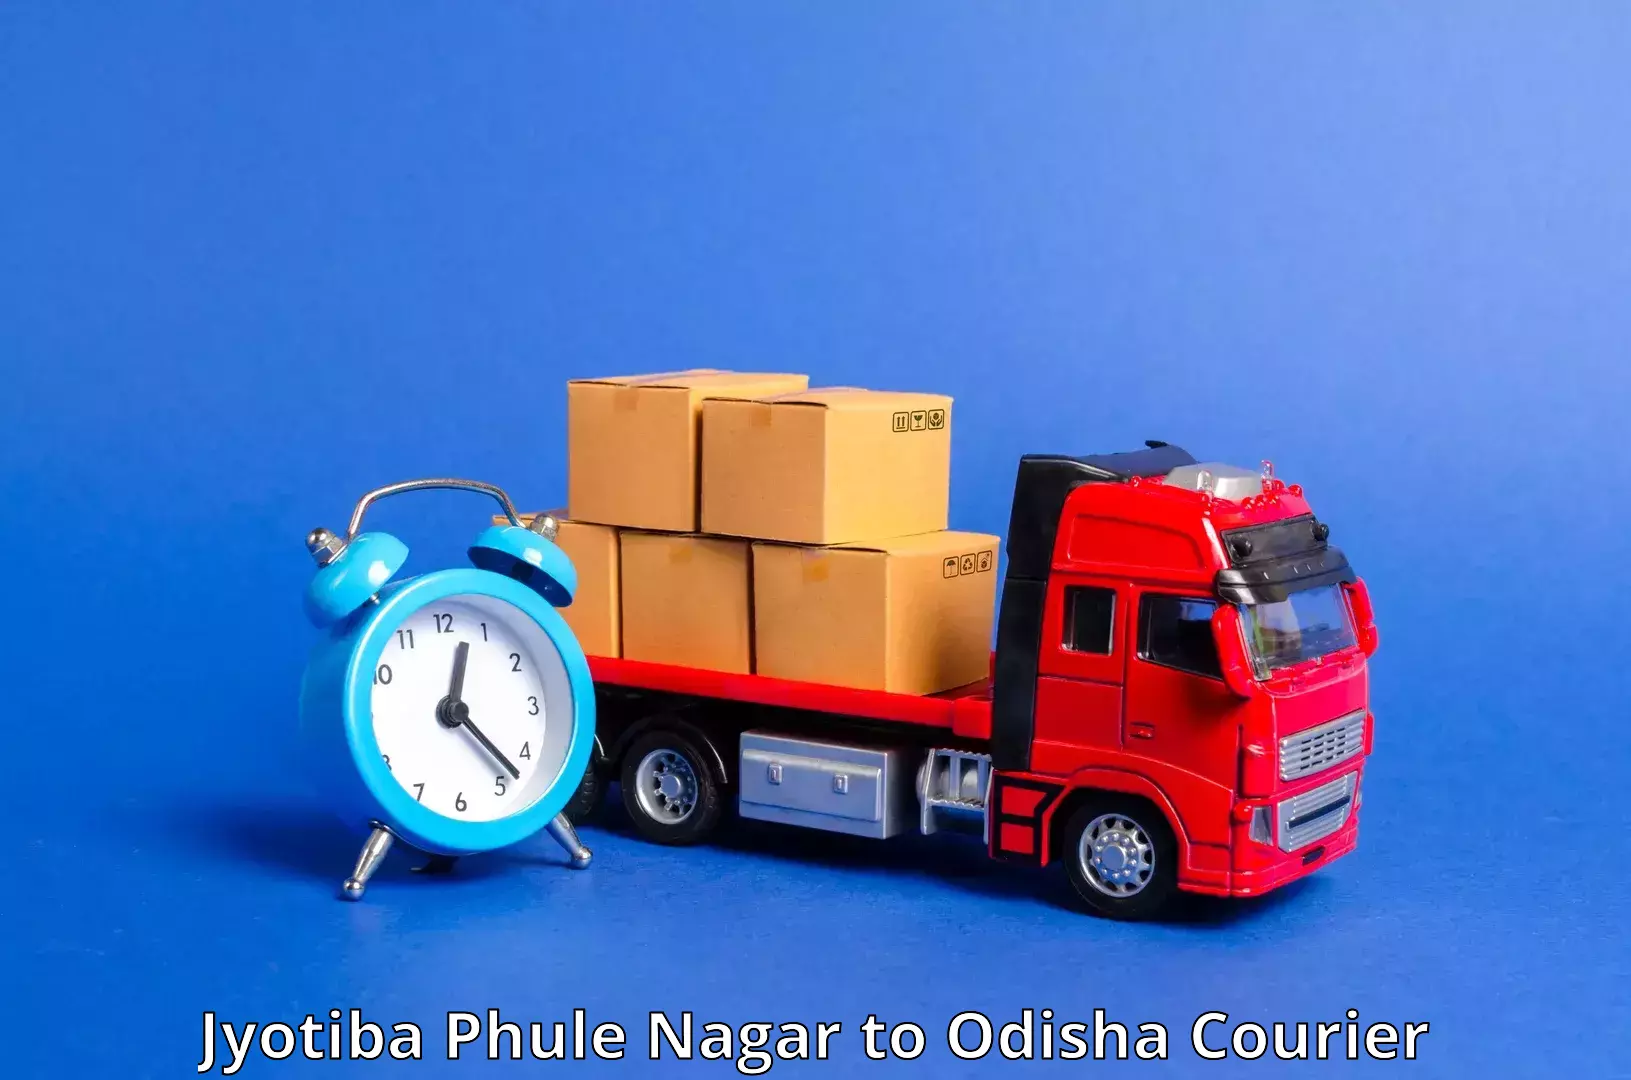 Enhanced tracking features Jyotiba Phule Nagar to Badagada